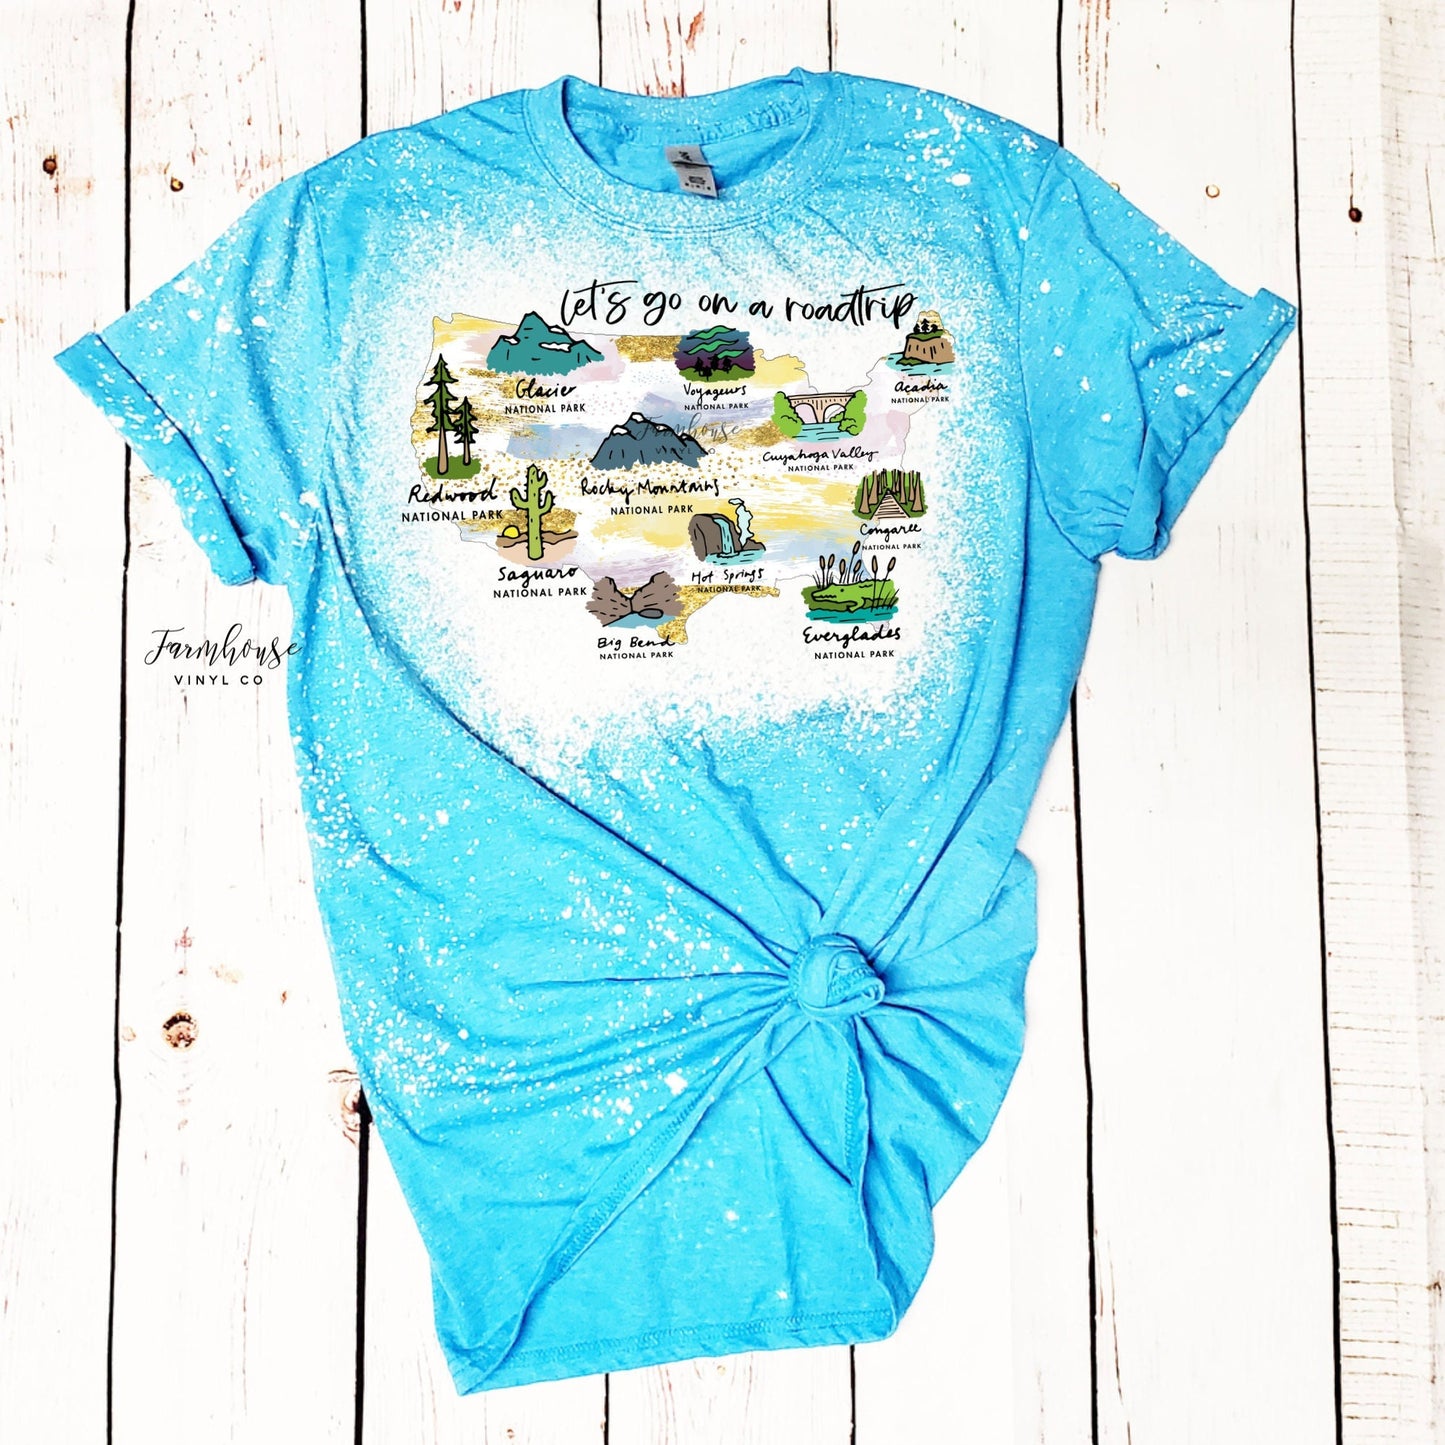 National Parks Road Map Bleached Shirt / 4th of July / Summer Vacation Shirts / NP Souvenir Shirt / Camping Road Trip / Lets Take A Roadtrip - Farmhouse Vinyl Co